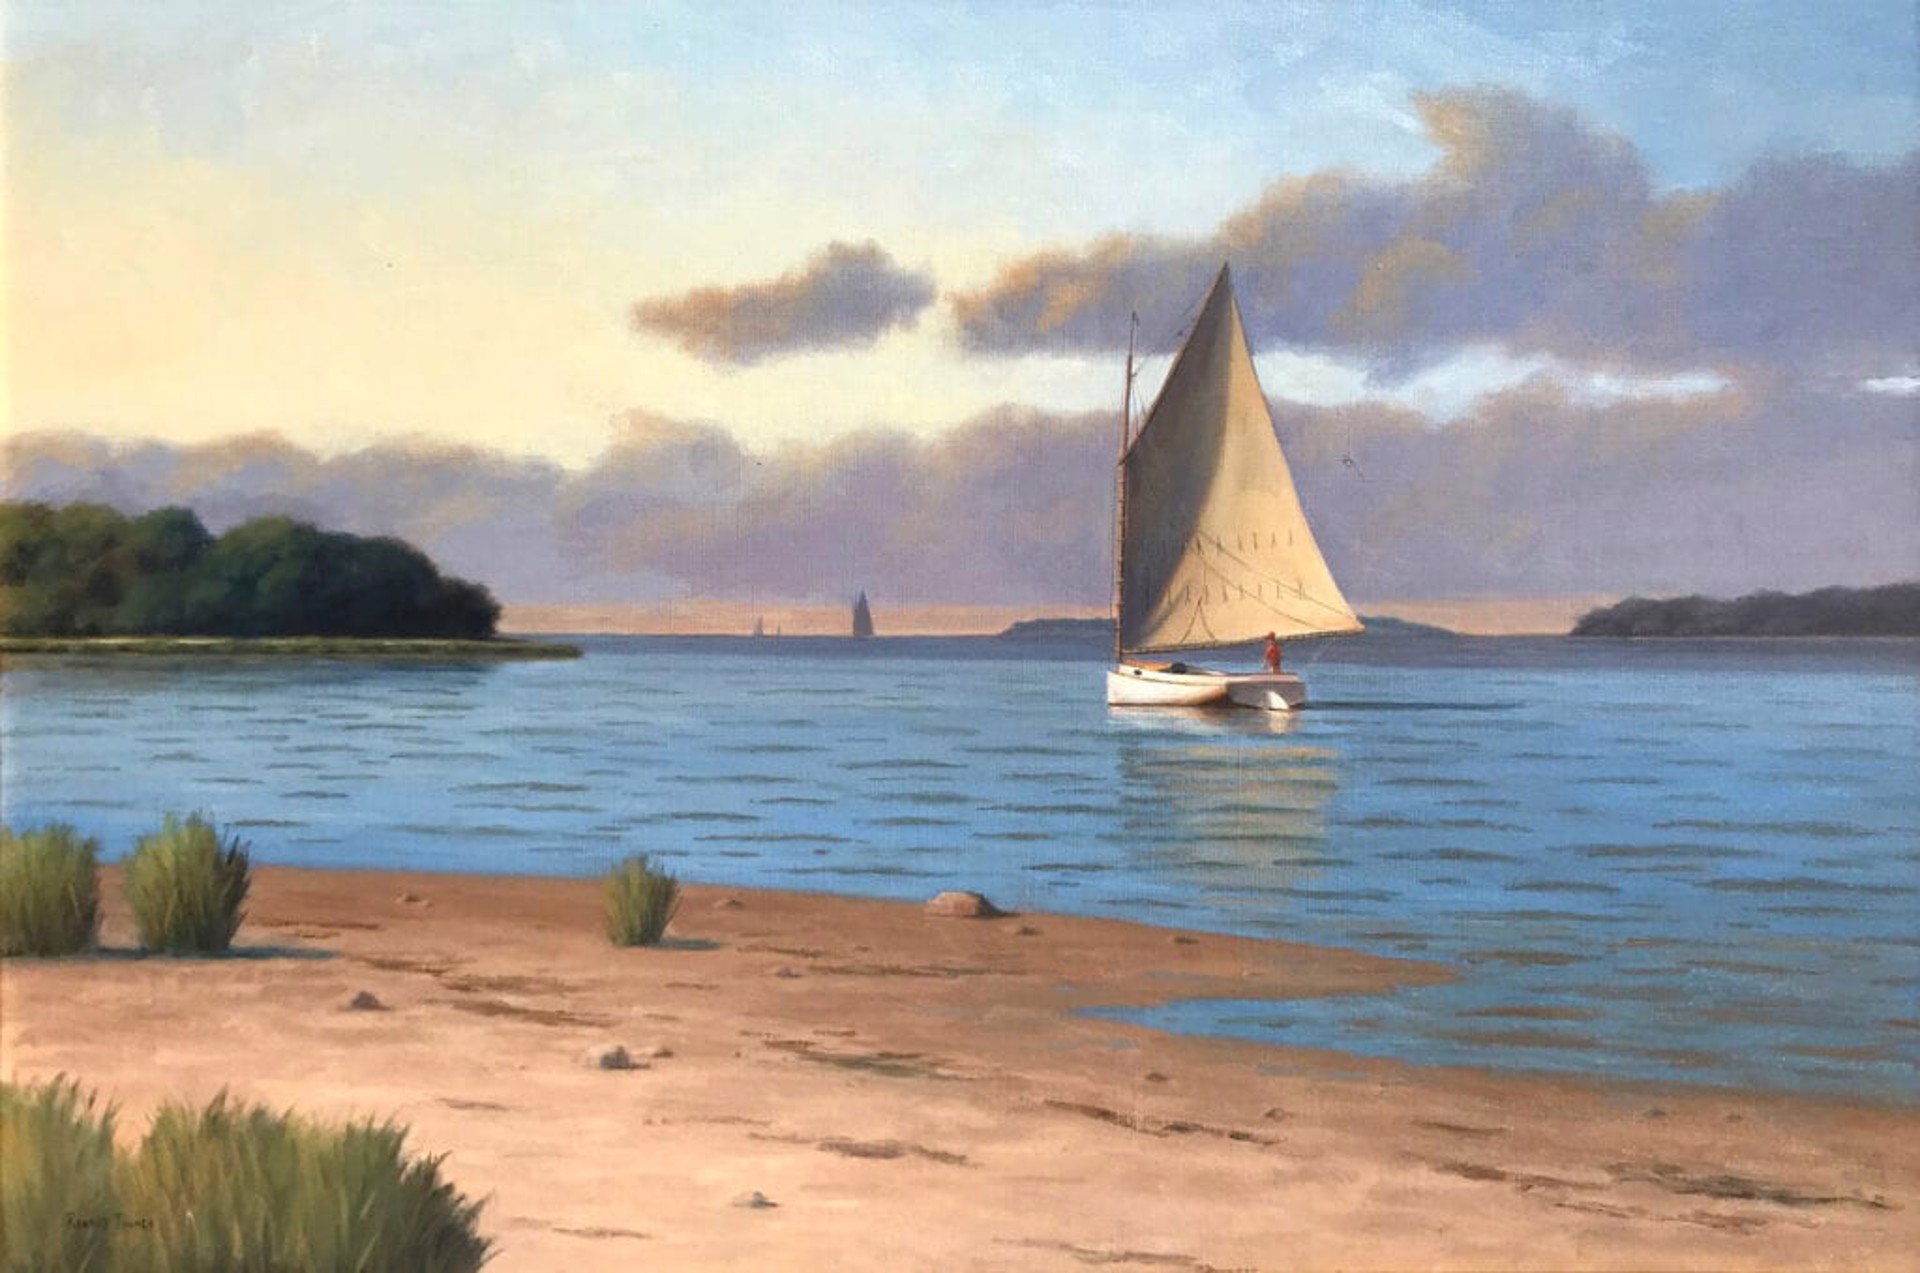 Saturday Sail by Ronald Tinney